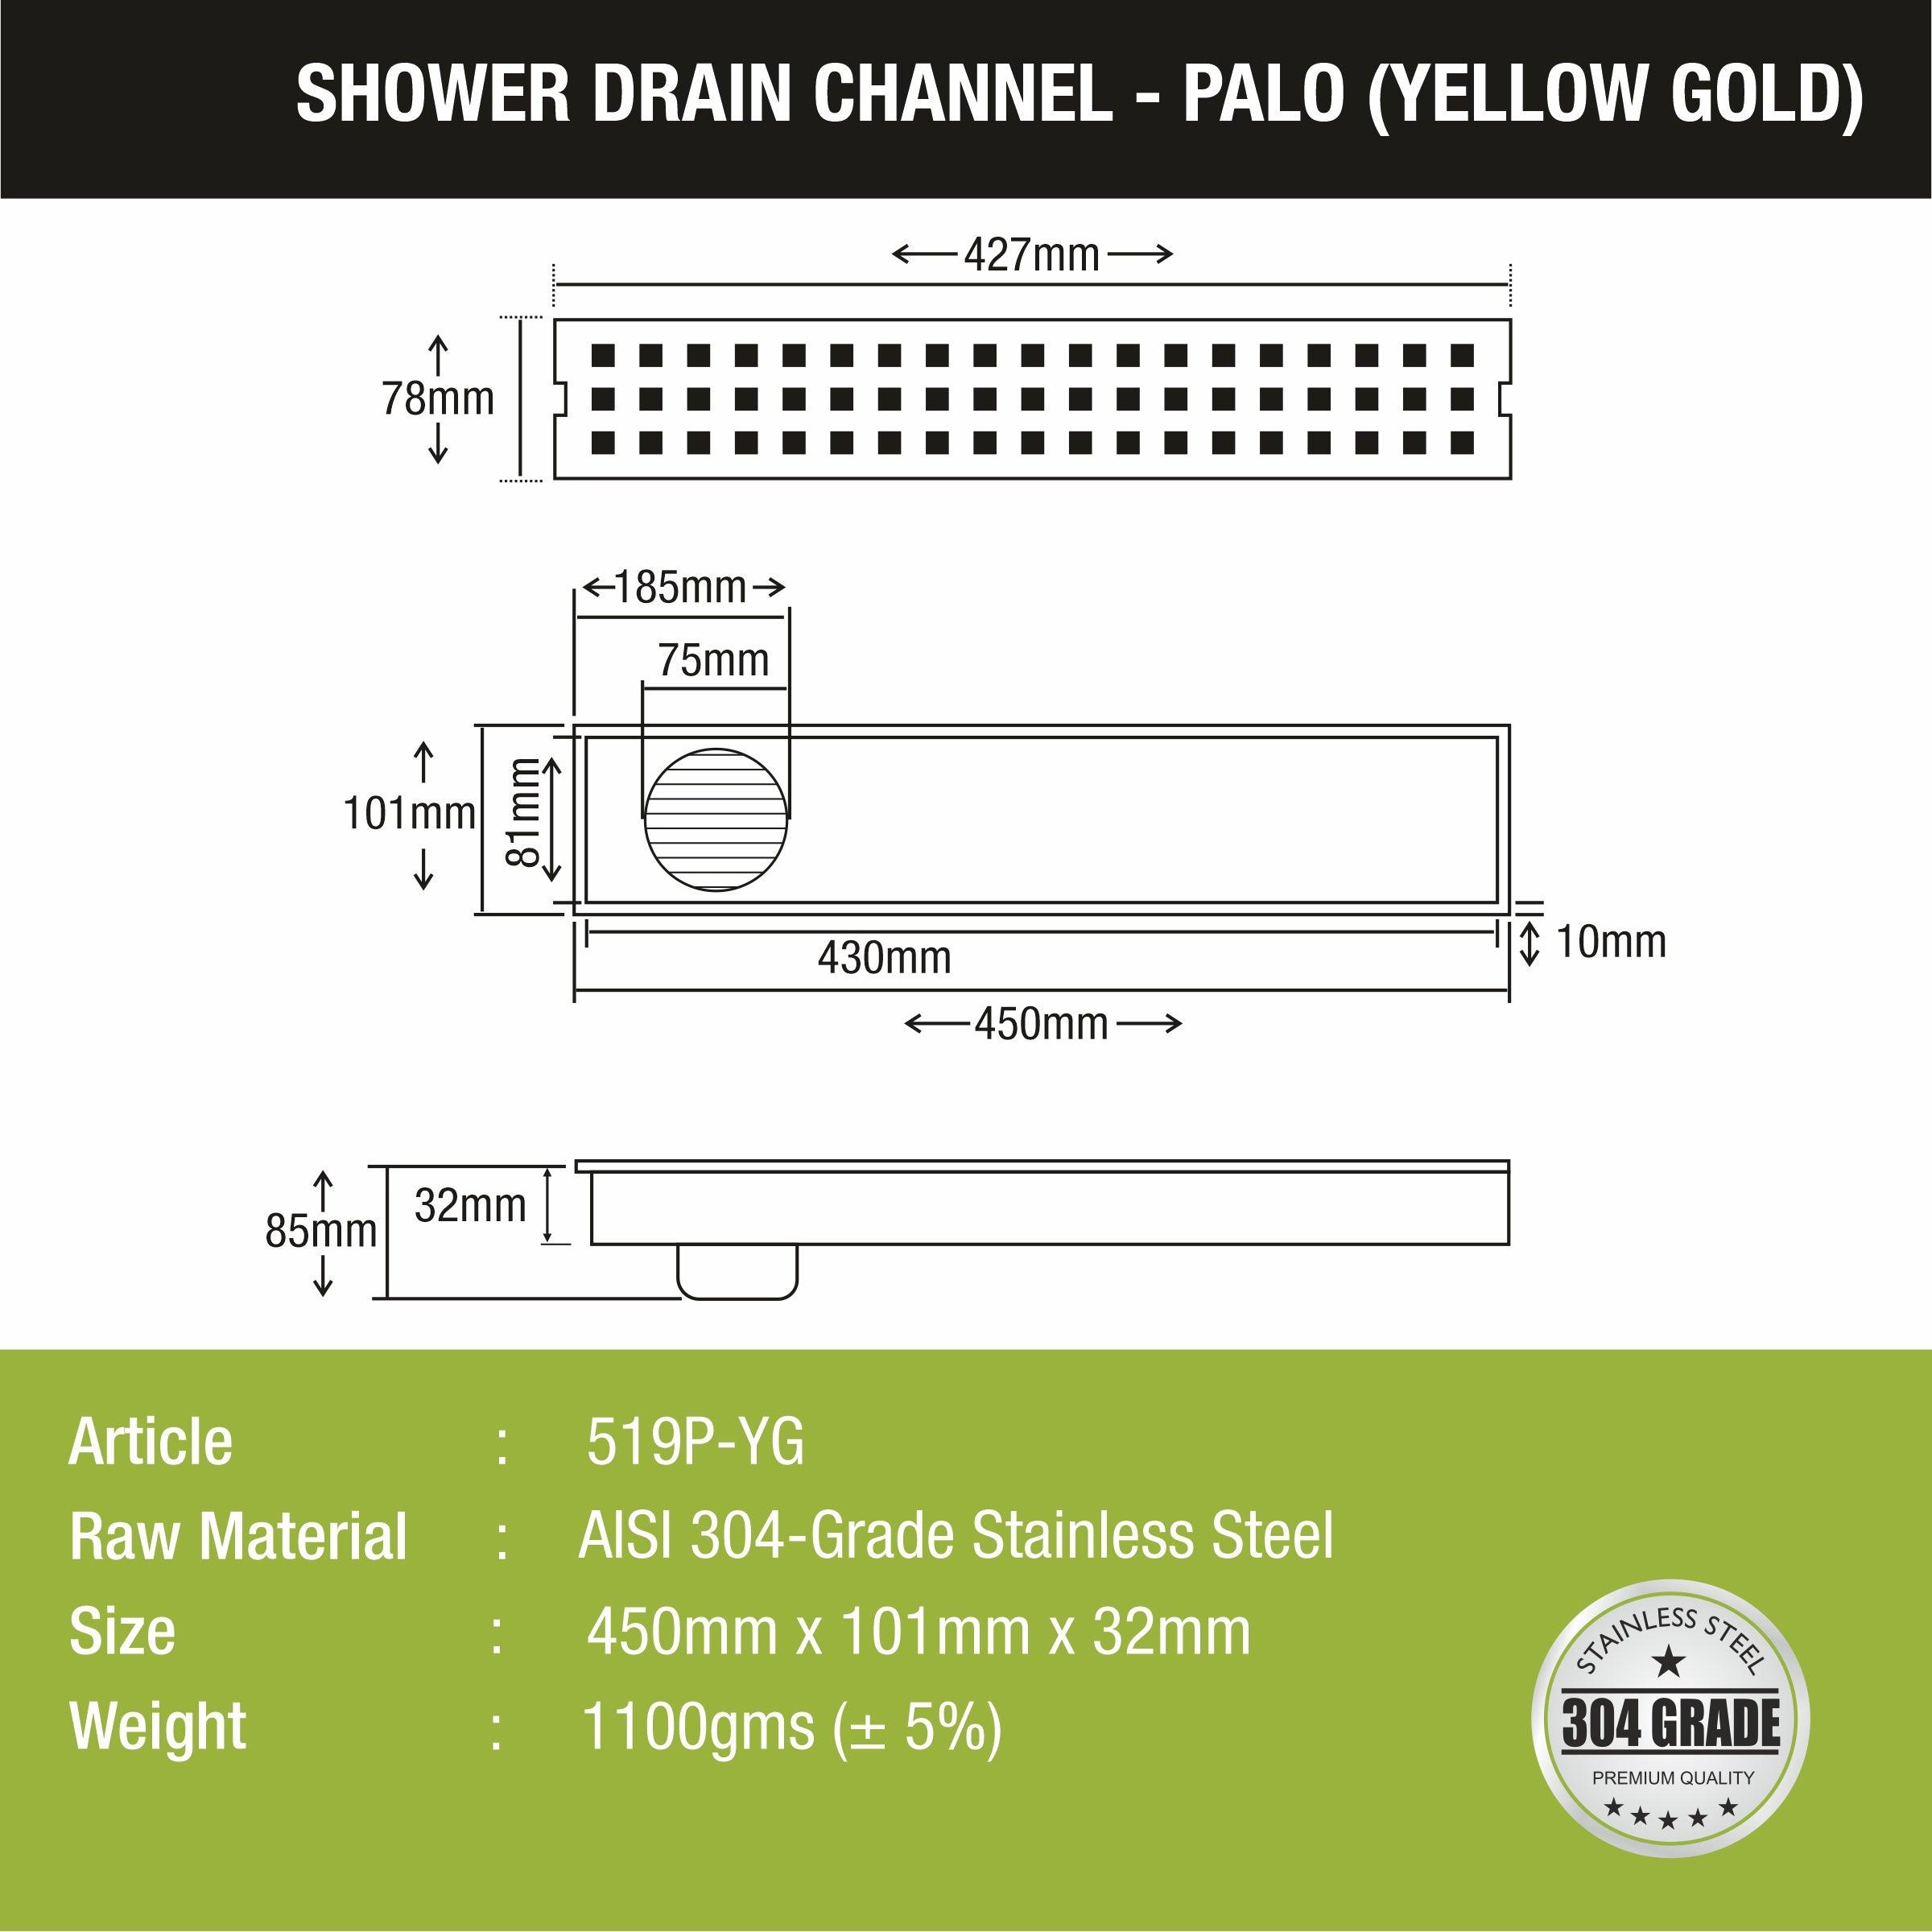 Palo Shower Drain Channel - Yellow Gold (18 x 4 Inches) - LIPKA - Lipka Home